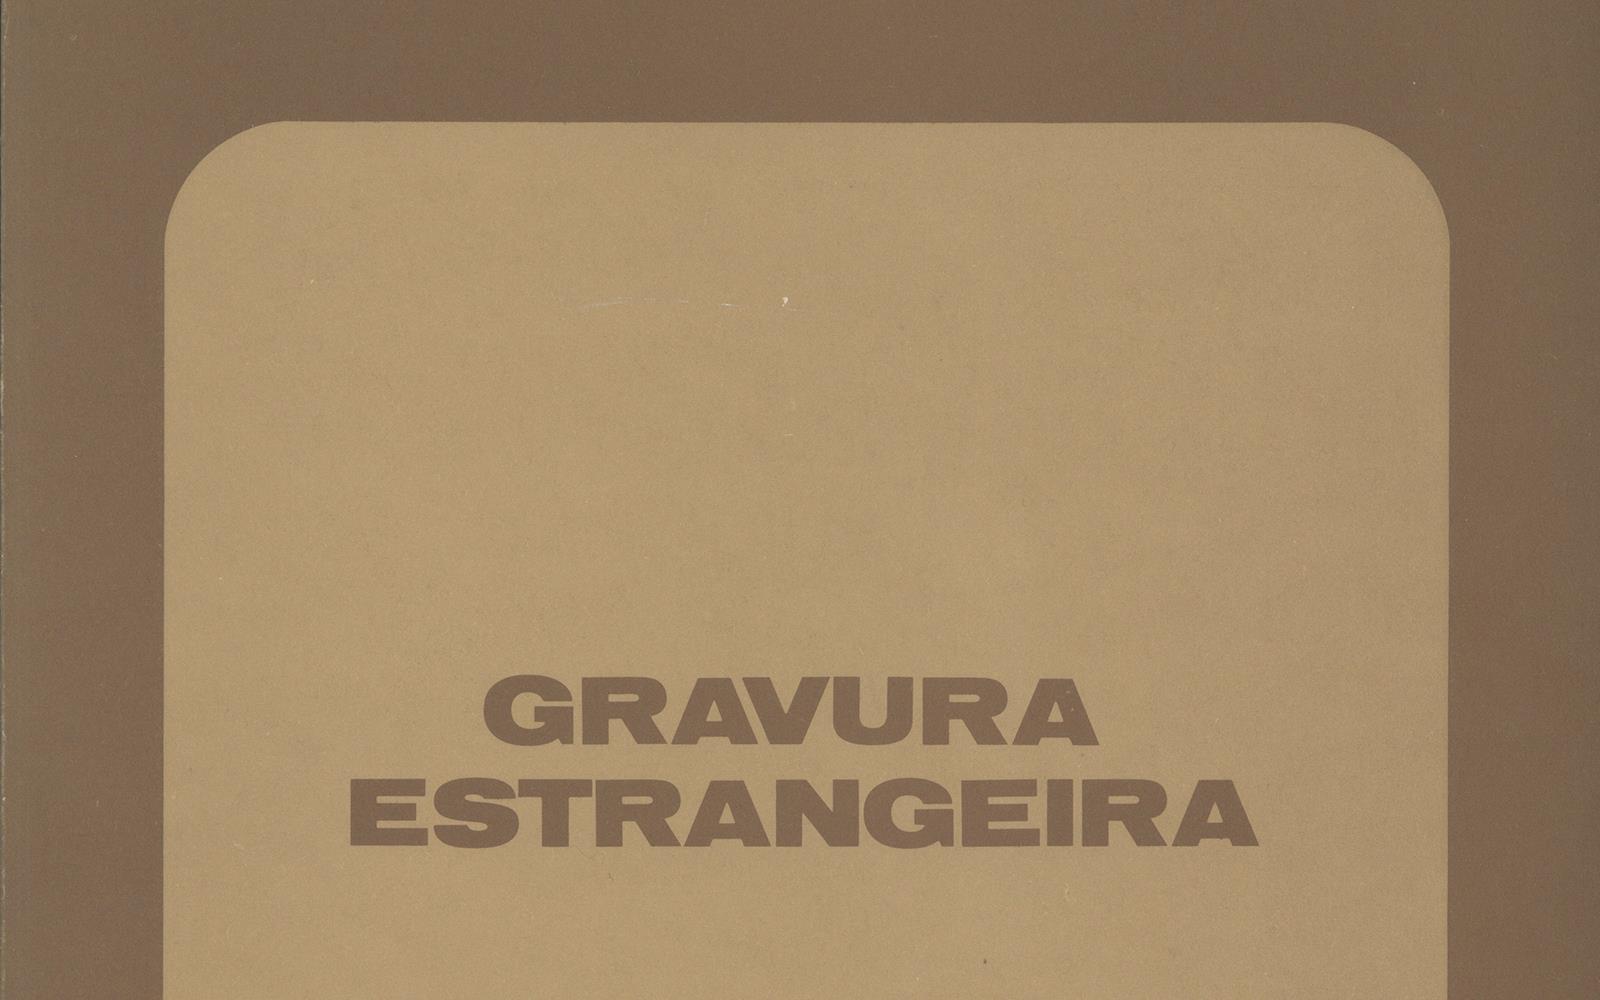 FC_1976_Gravura_Estrangeira_GR 562